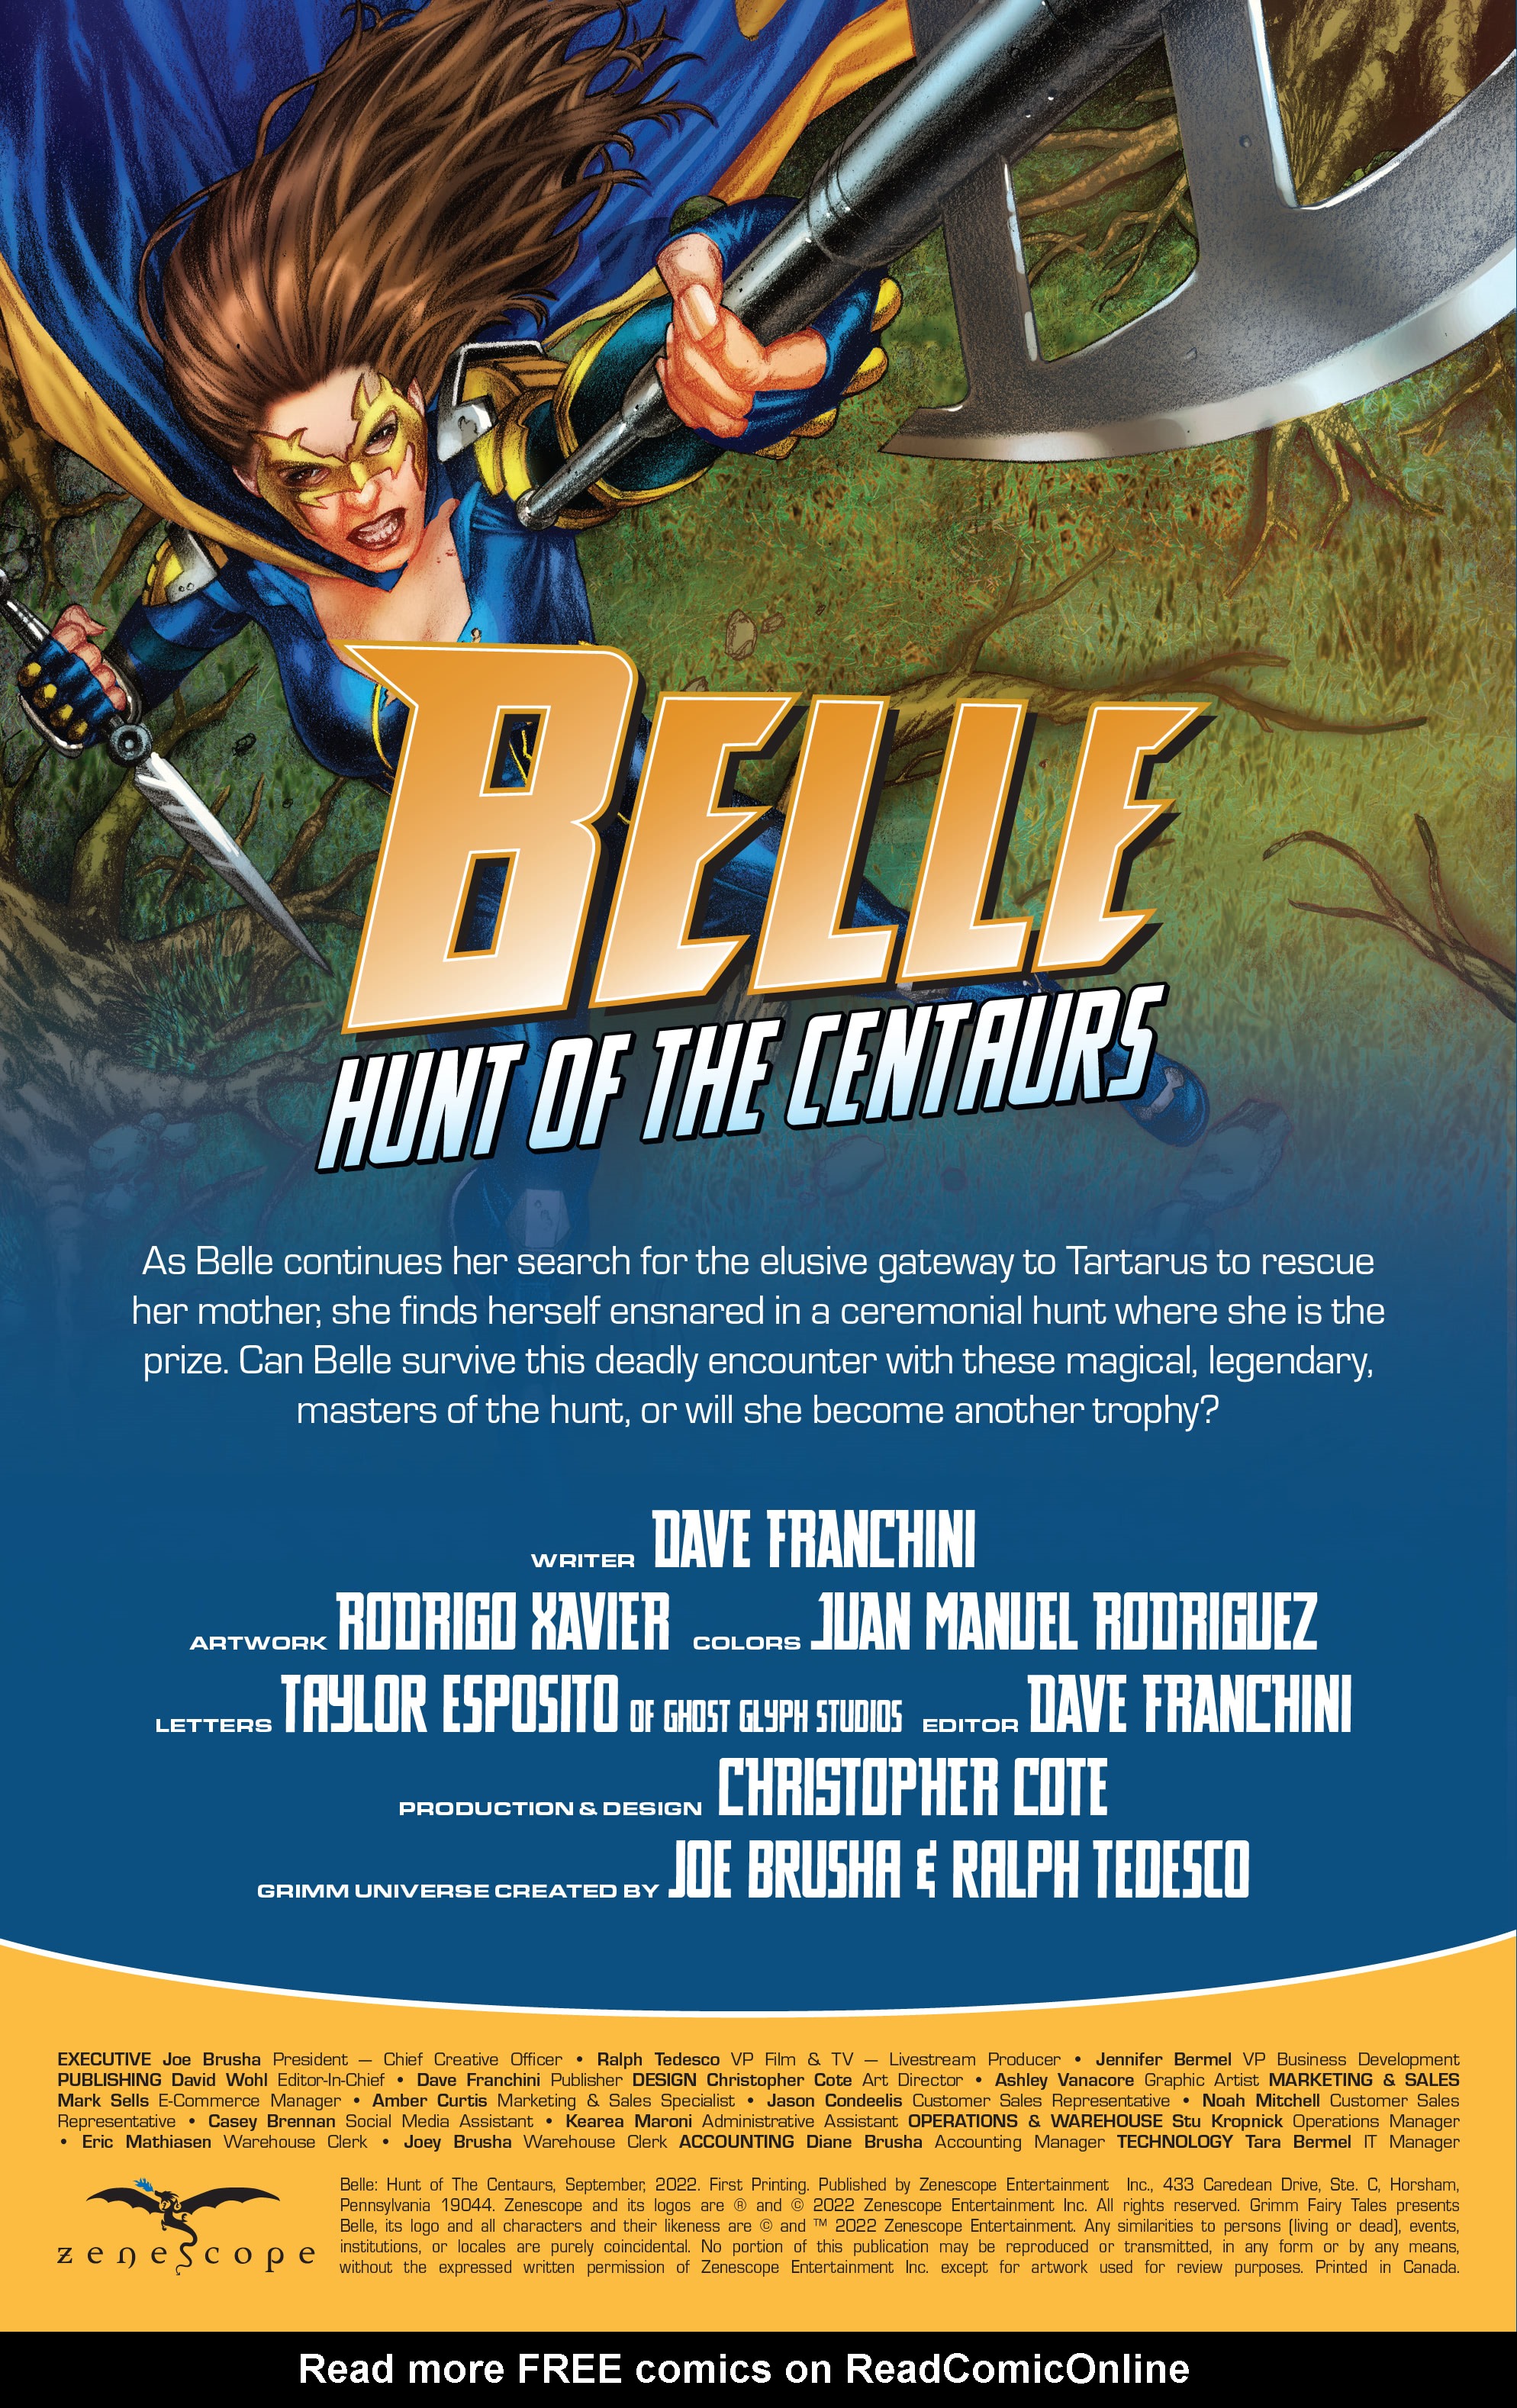 Read online Belle: Hunt of the Centaurs comic -  Issue # Full - 2